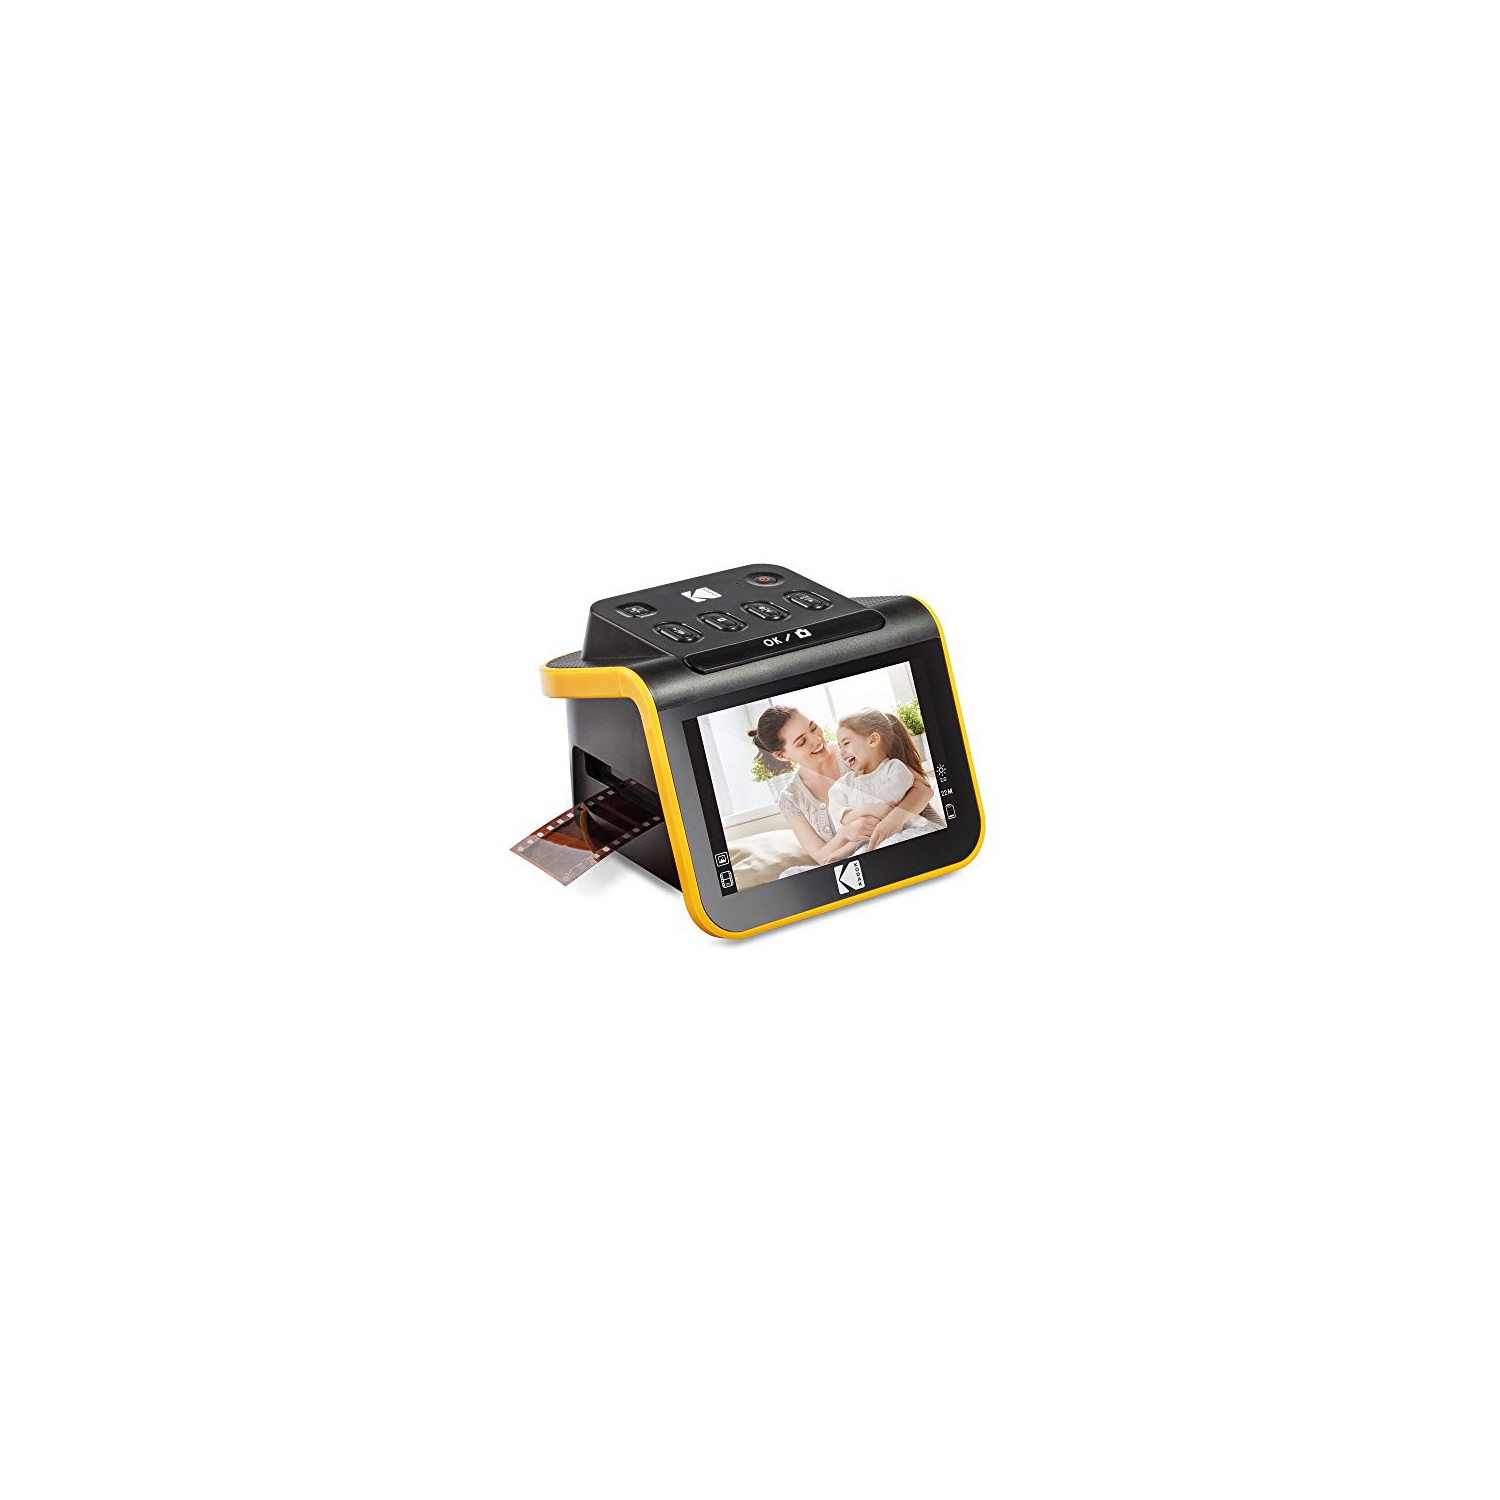 KODAK SLIDE N SCAN Film and Slide Scanner with Large 5” LCD Screen